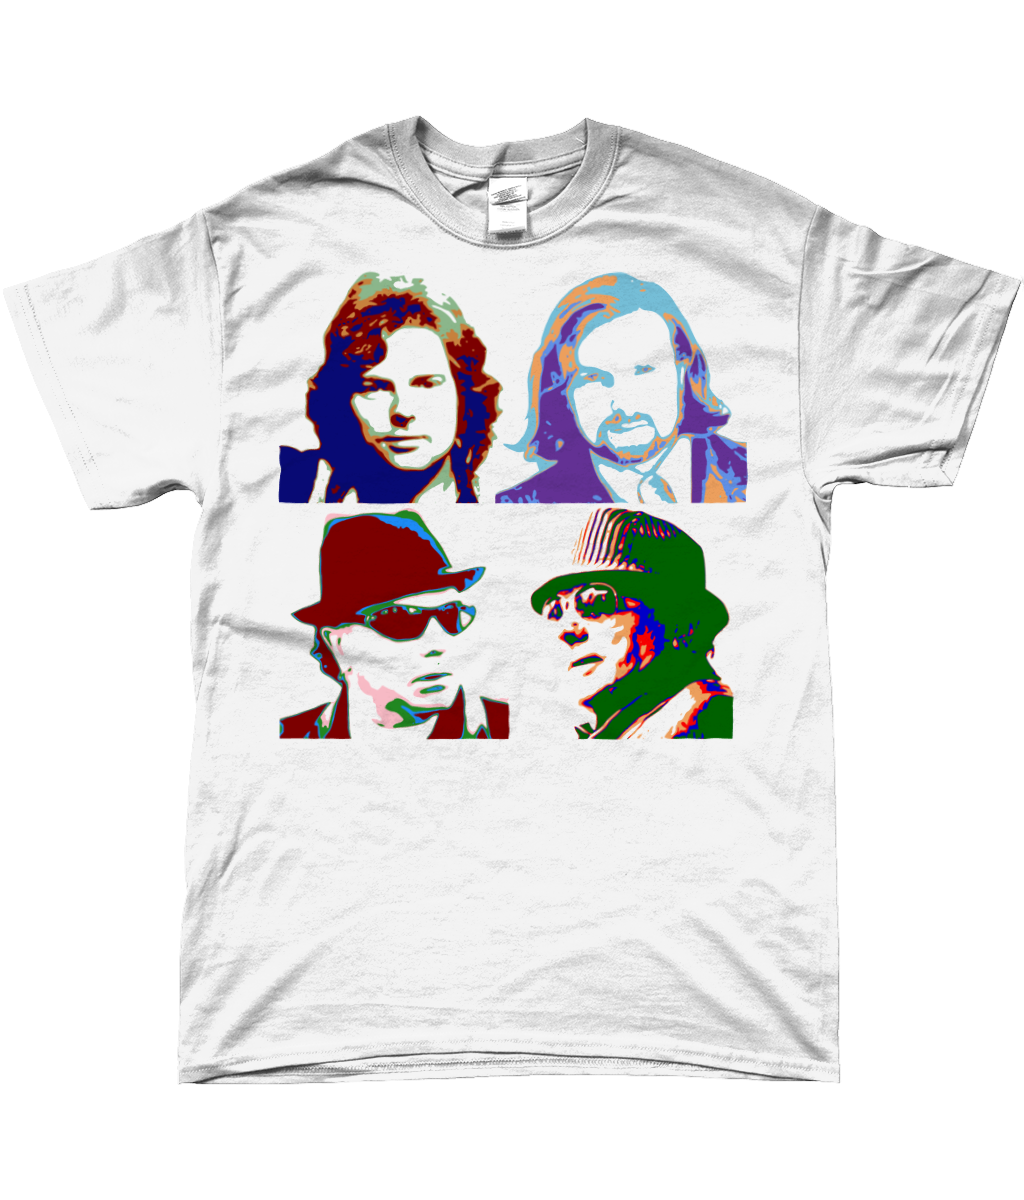 Van Morrison t-shirt